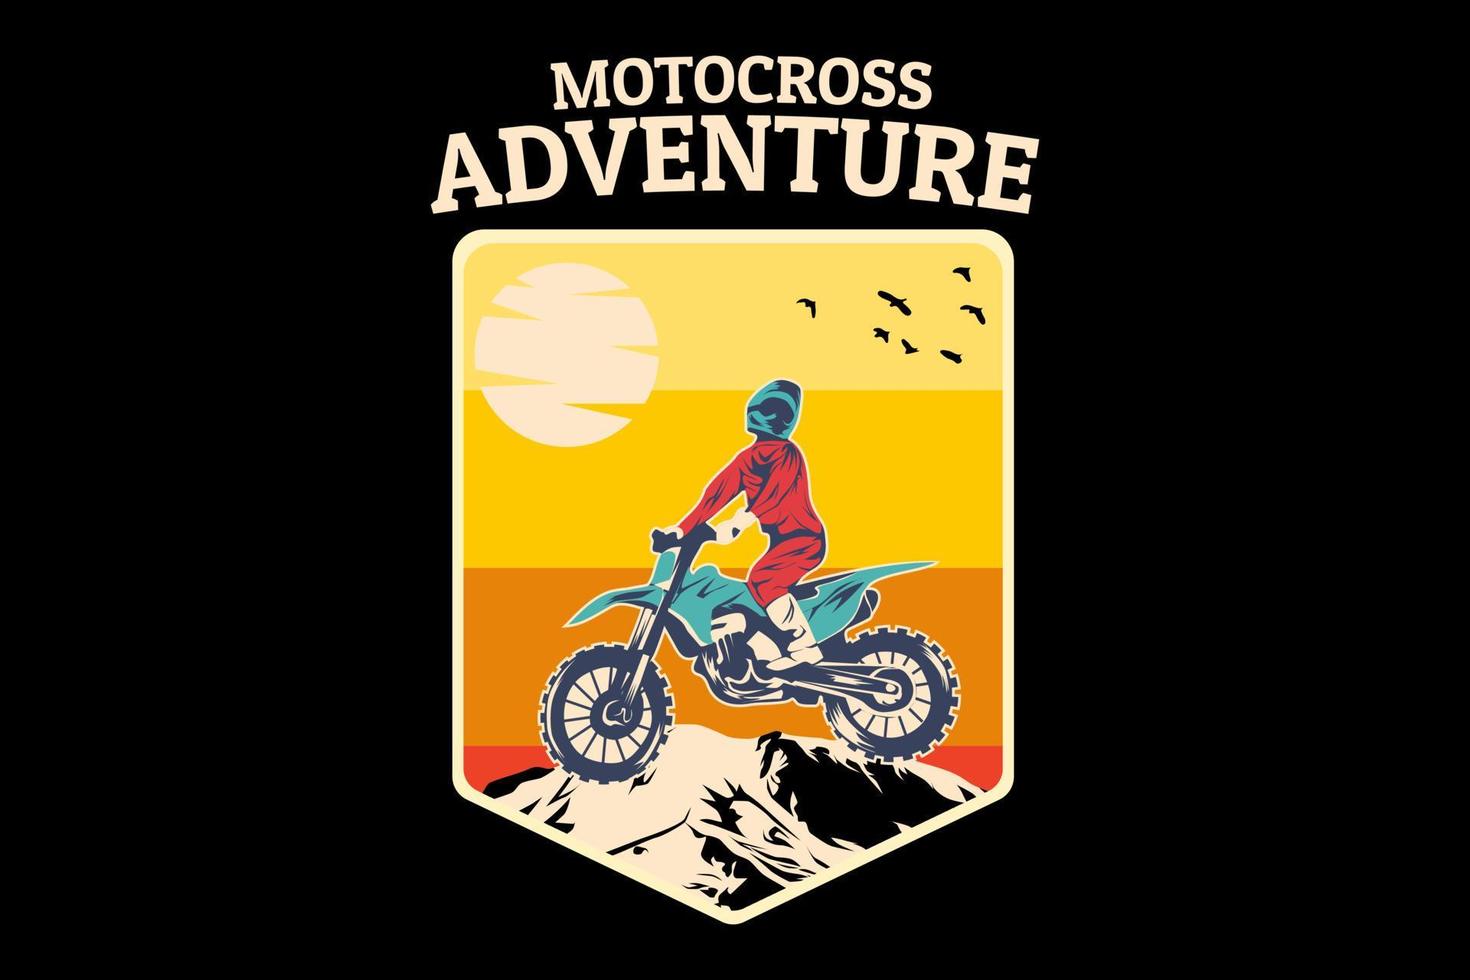 Motocross-Abenteuer-Silhouette-Design vektor